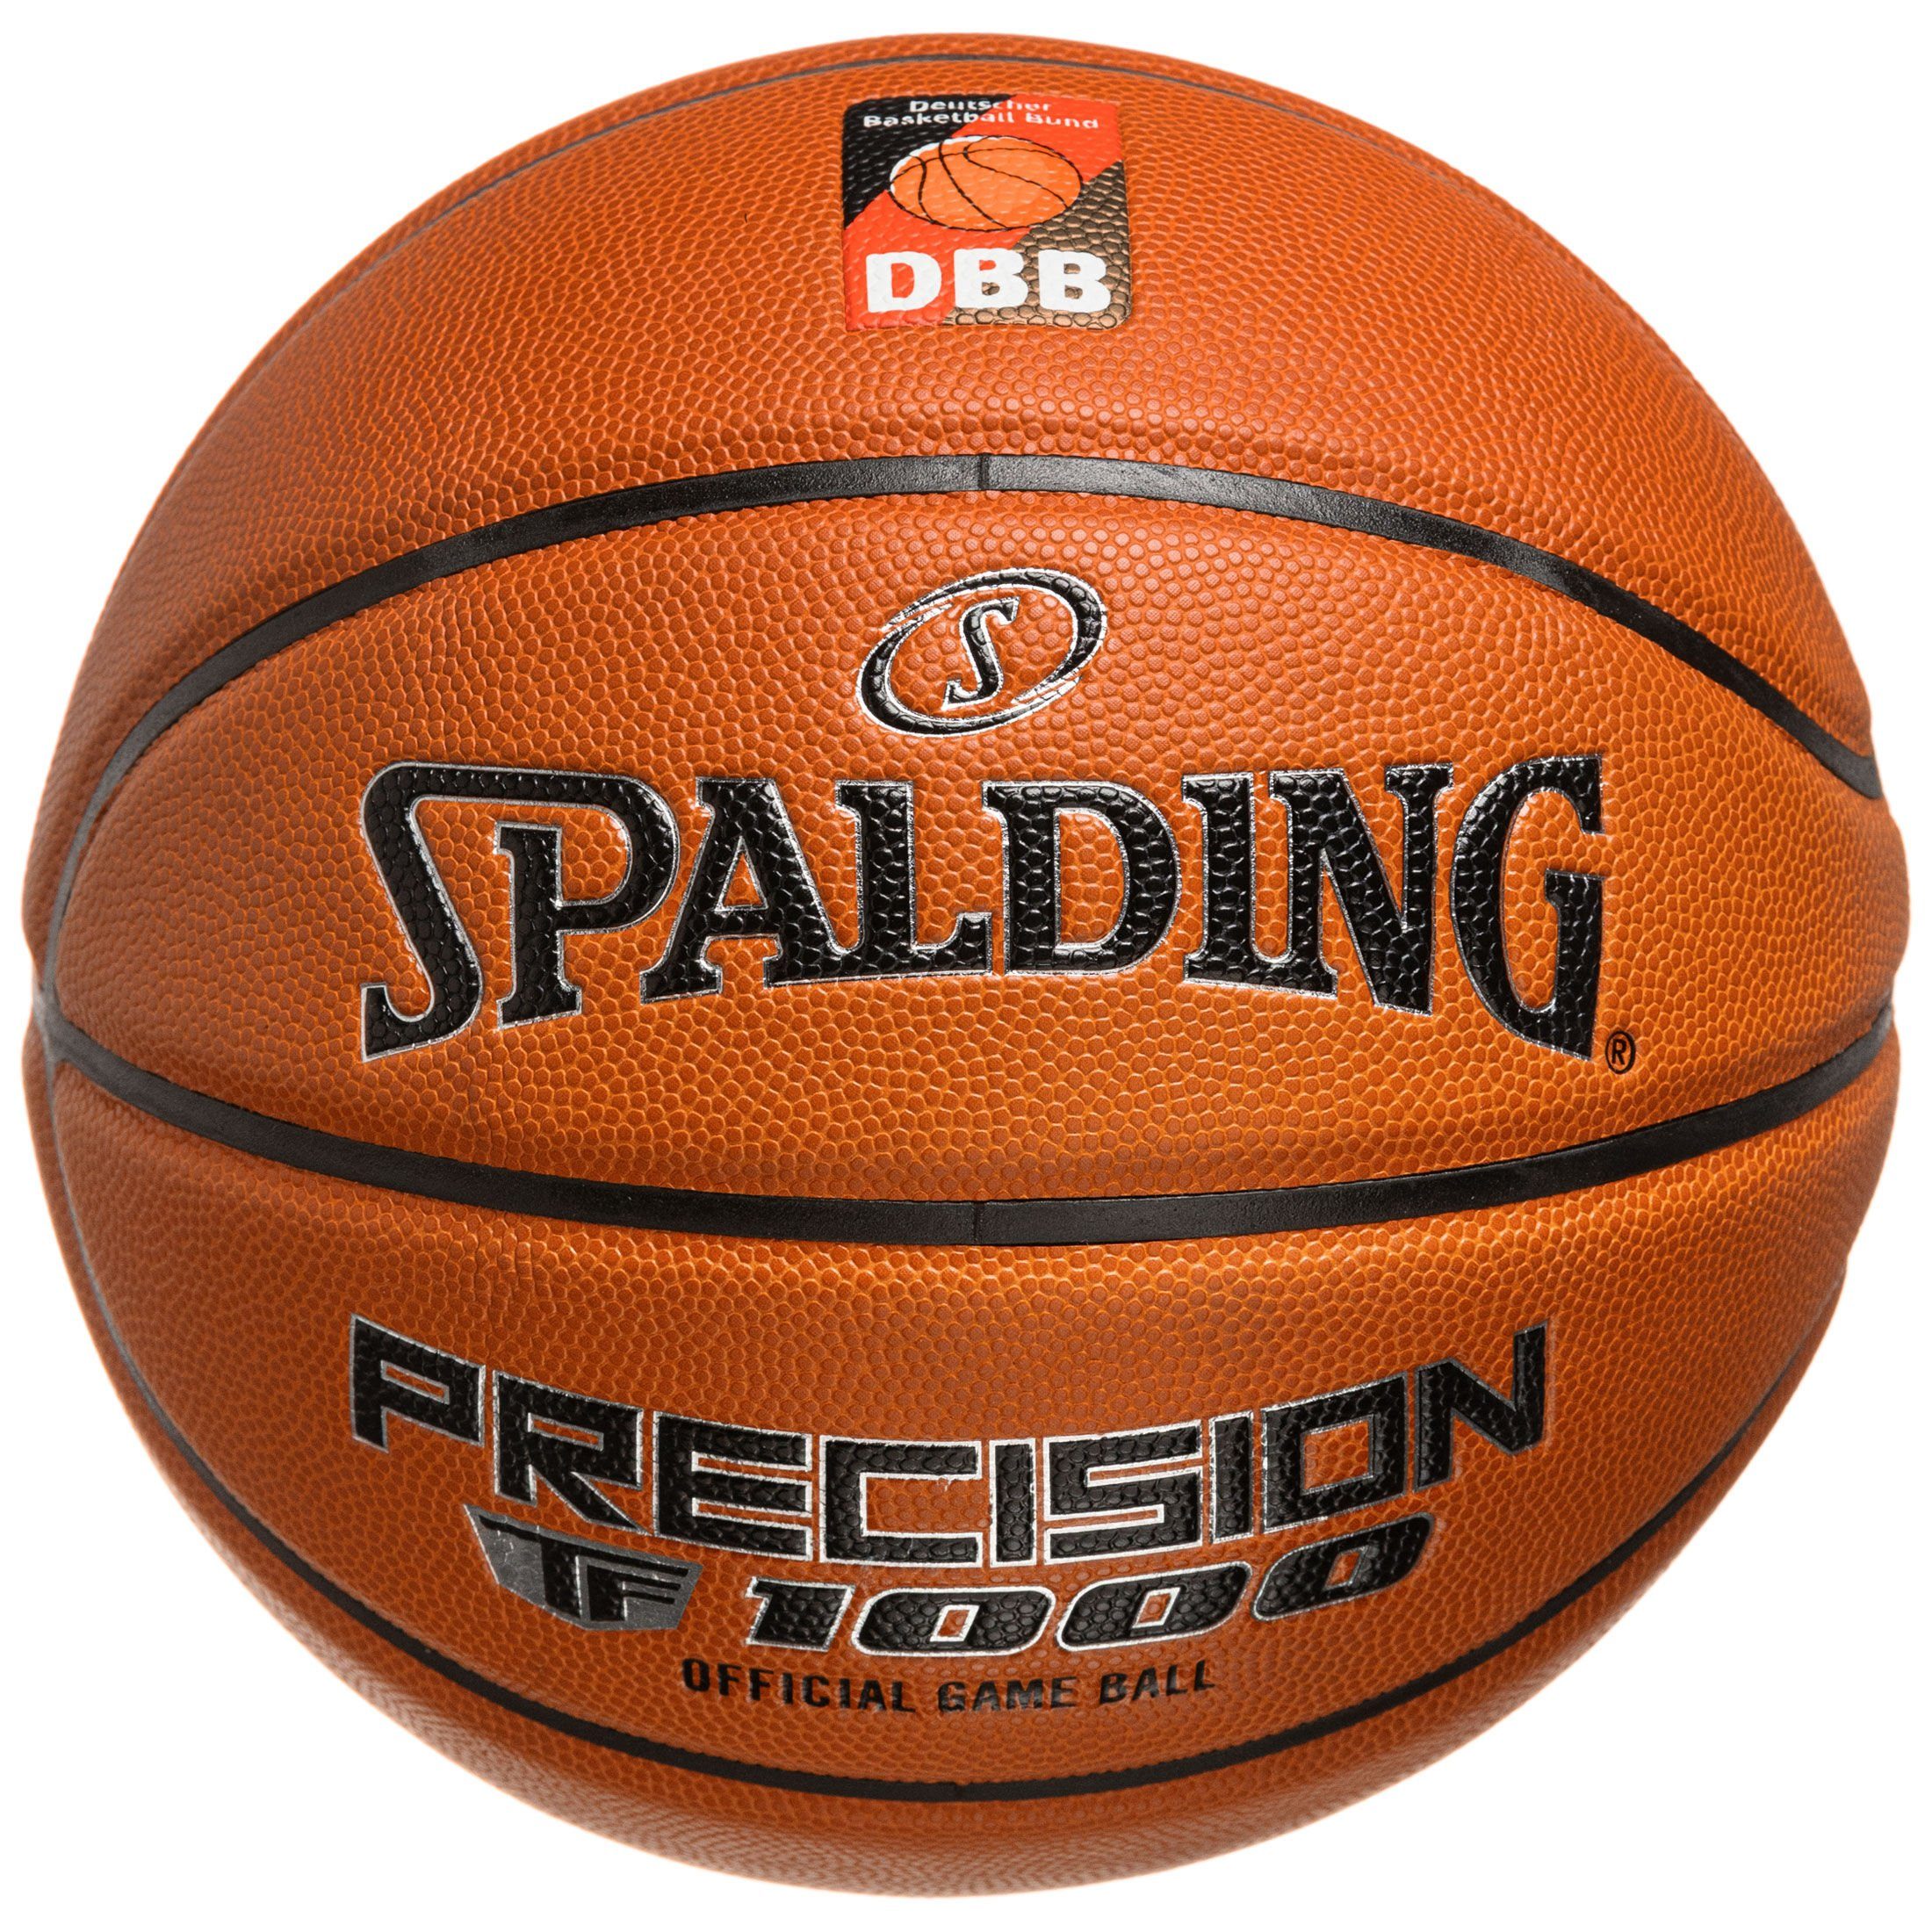 Spalding Basketball DBB Precision TF-1000 Basketball